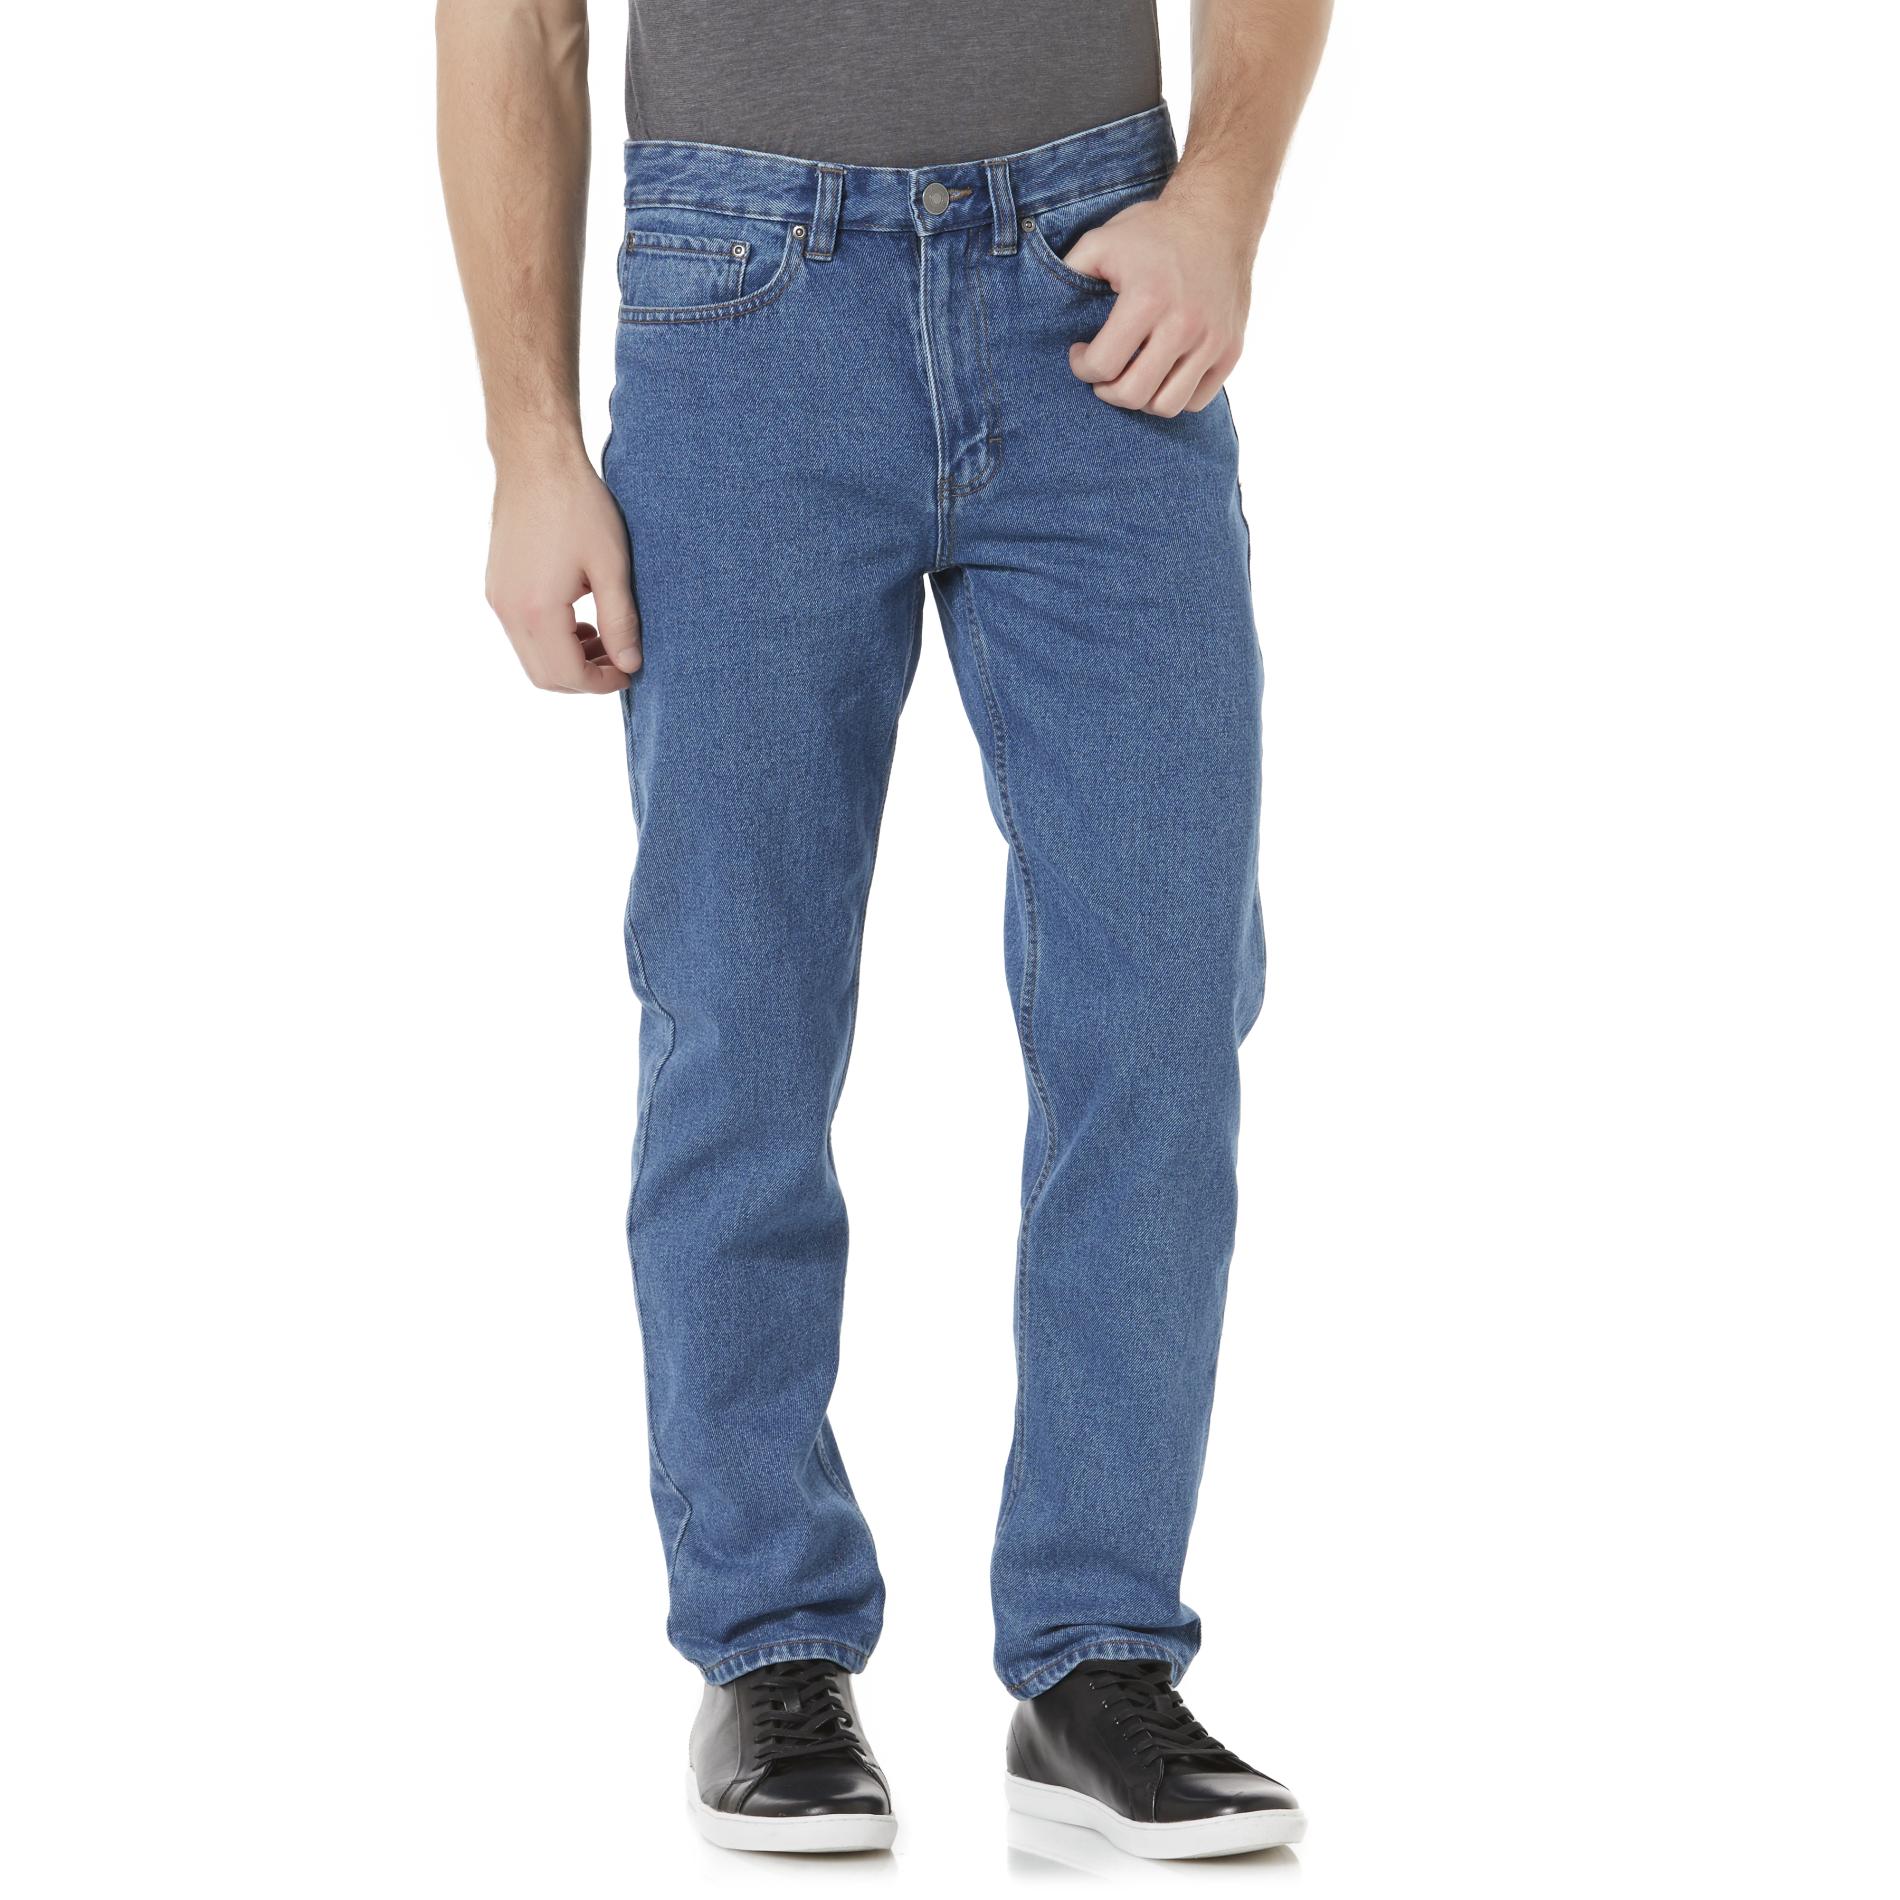 Mens Jeans | Kmart.com